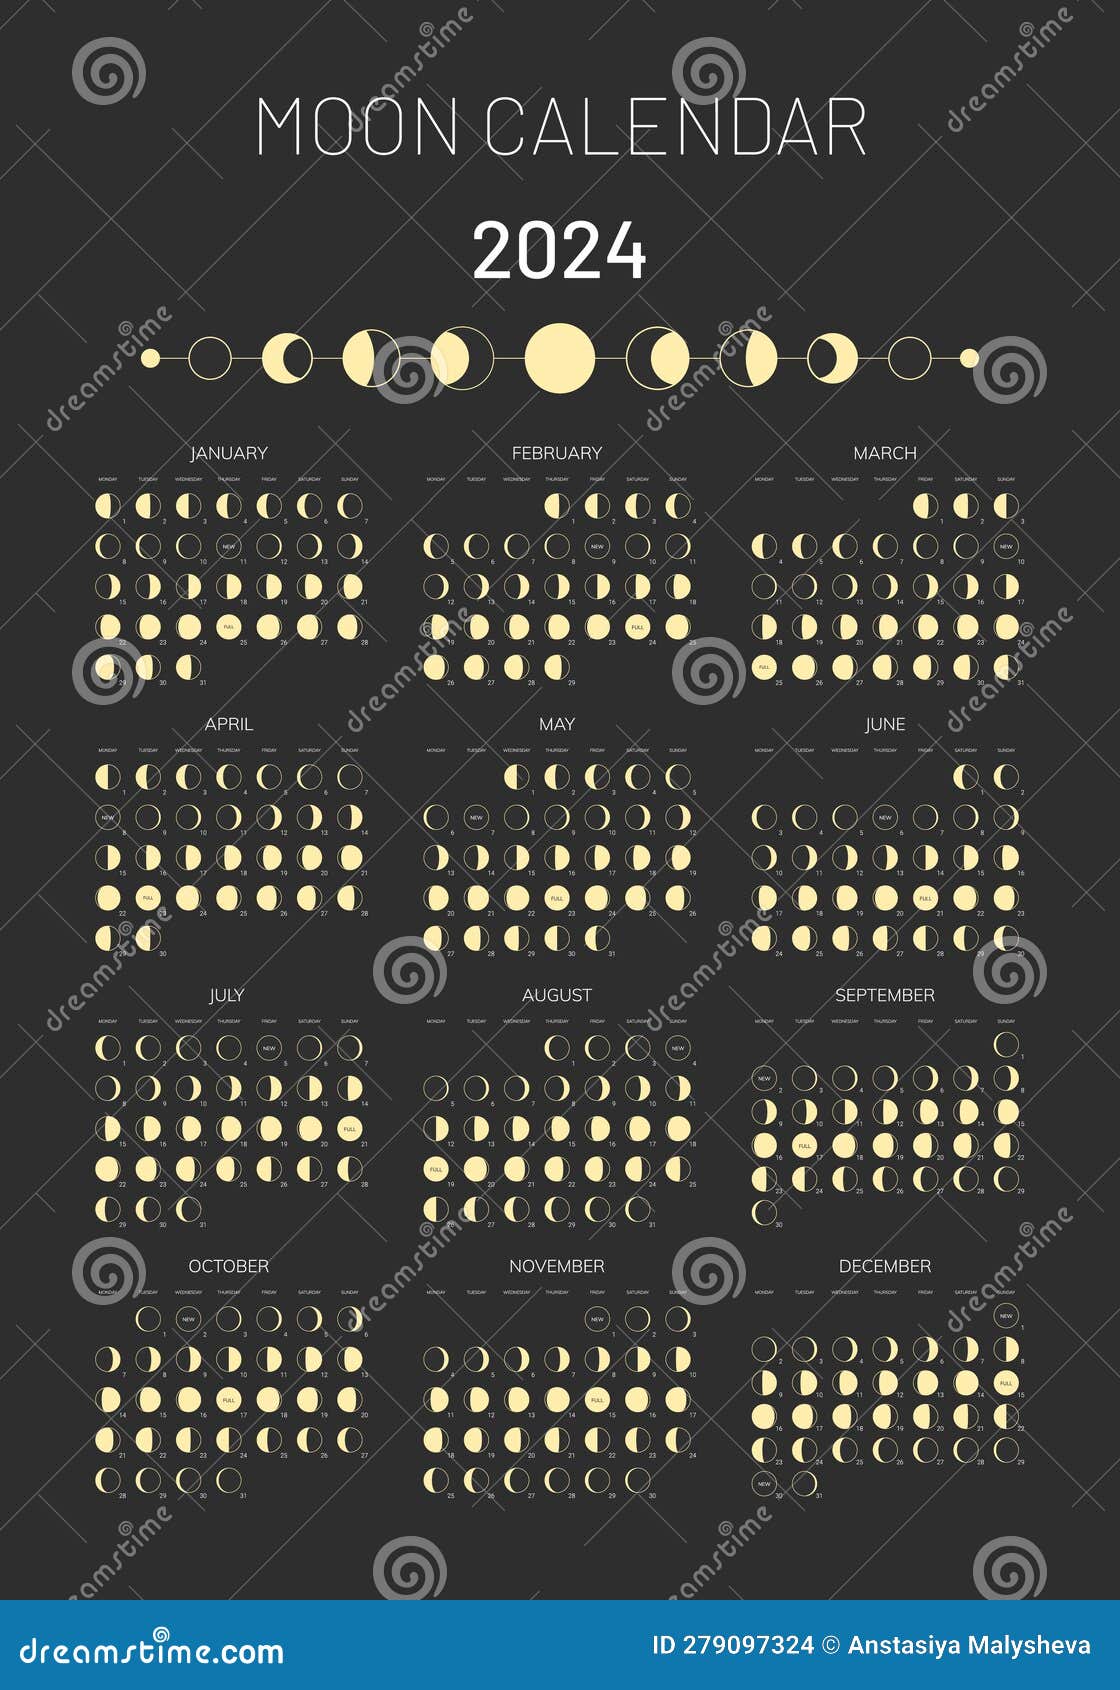 2024 Year Moon Calendar Stock Illustrations – 494 2024 Year Moon Calendar  Stock Illustrations, Vectors & Clipart - Dreamstime